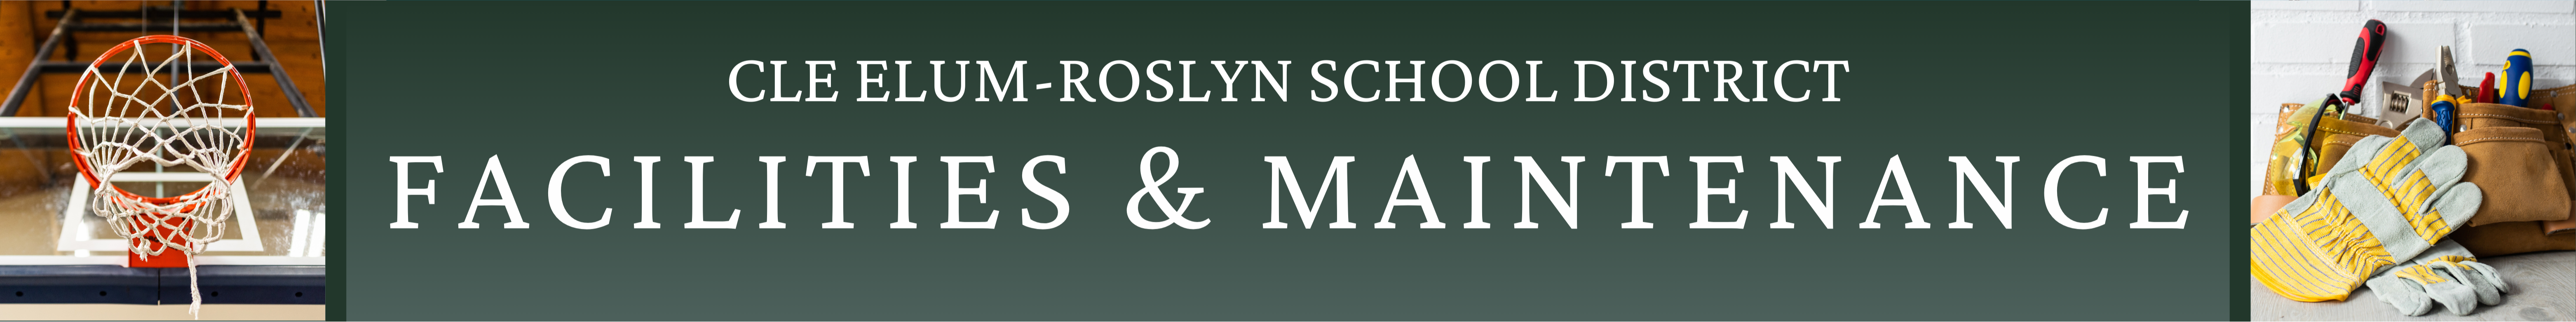 Cle Elum-Roslyn School District Facilities and Maintenance